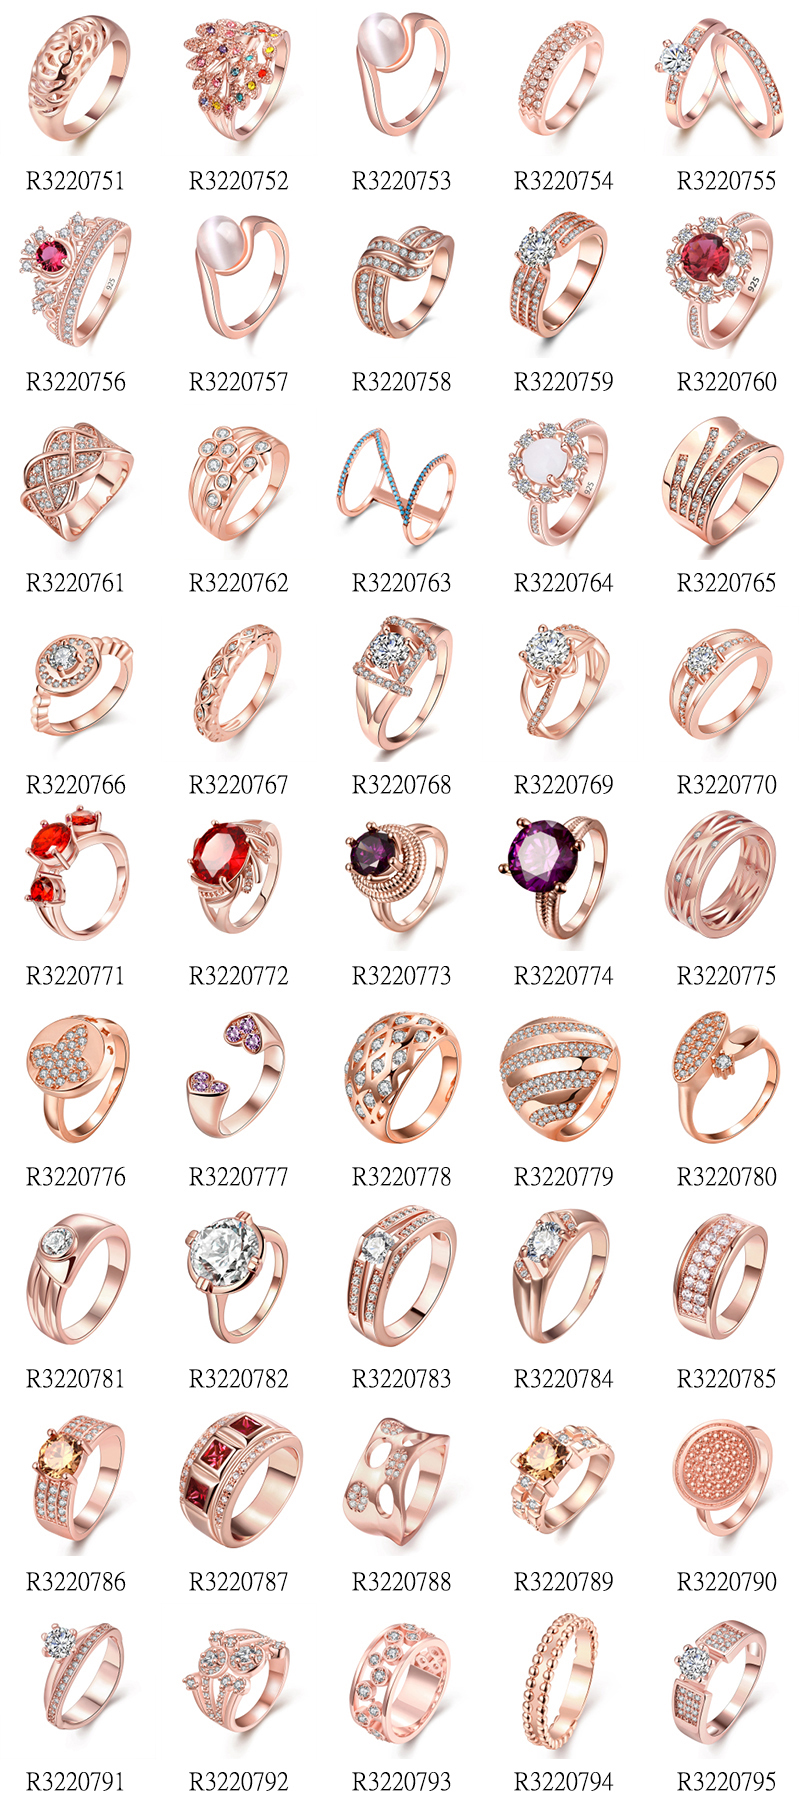 Gold ladies Ring latest design for ladies #goldrings #goldring #916hallmark  #22kgold #explorepage #explore #ring #rings | Instagram